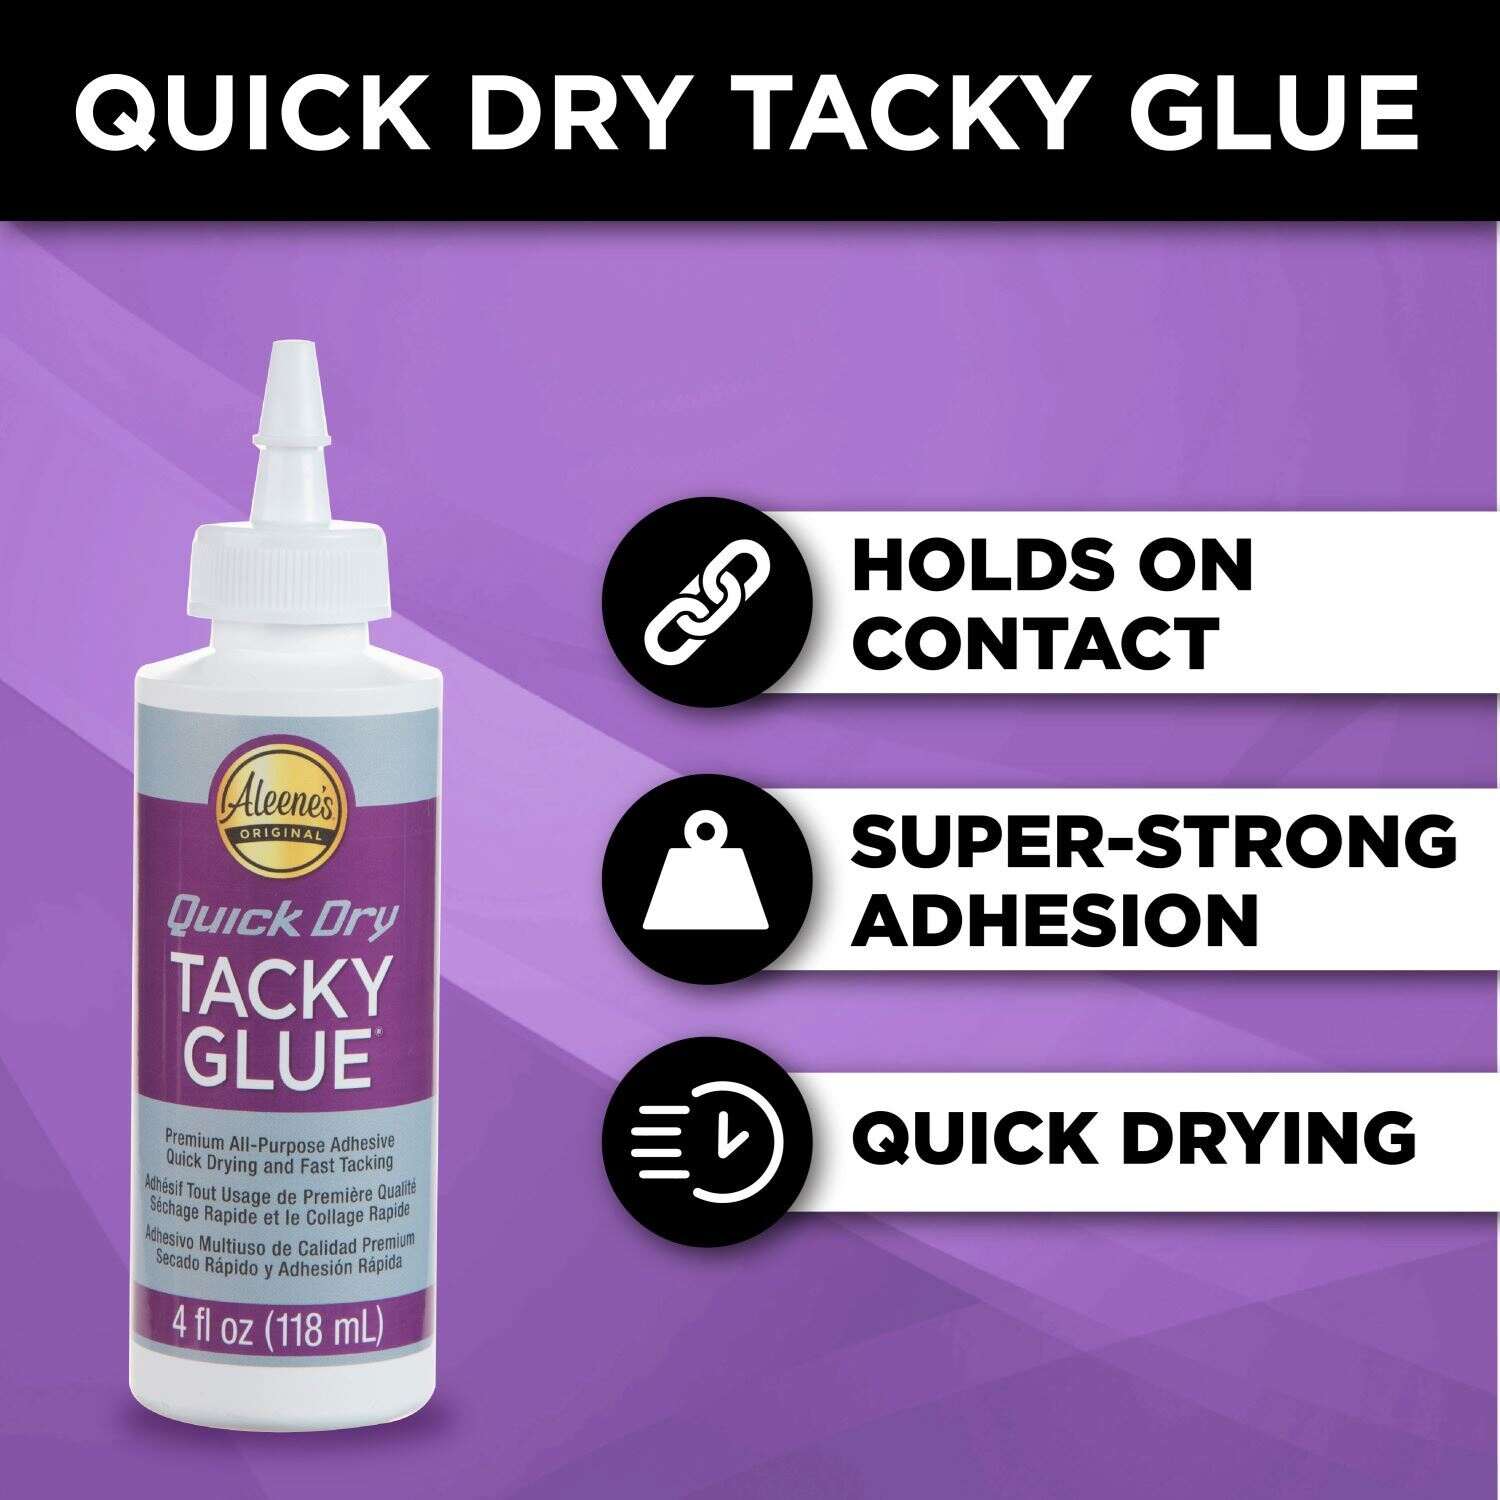 Aleene's Tacky Glue Quick Dry